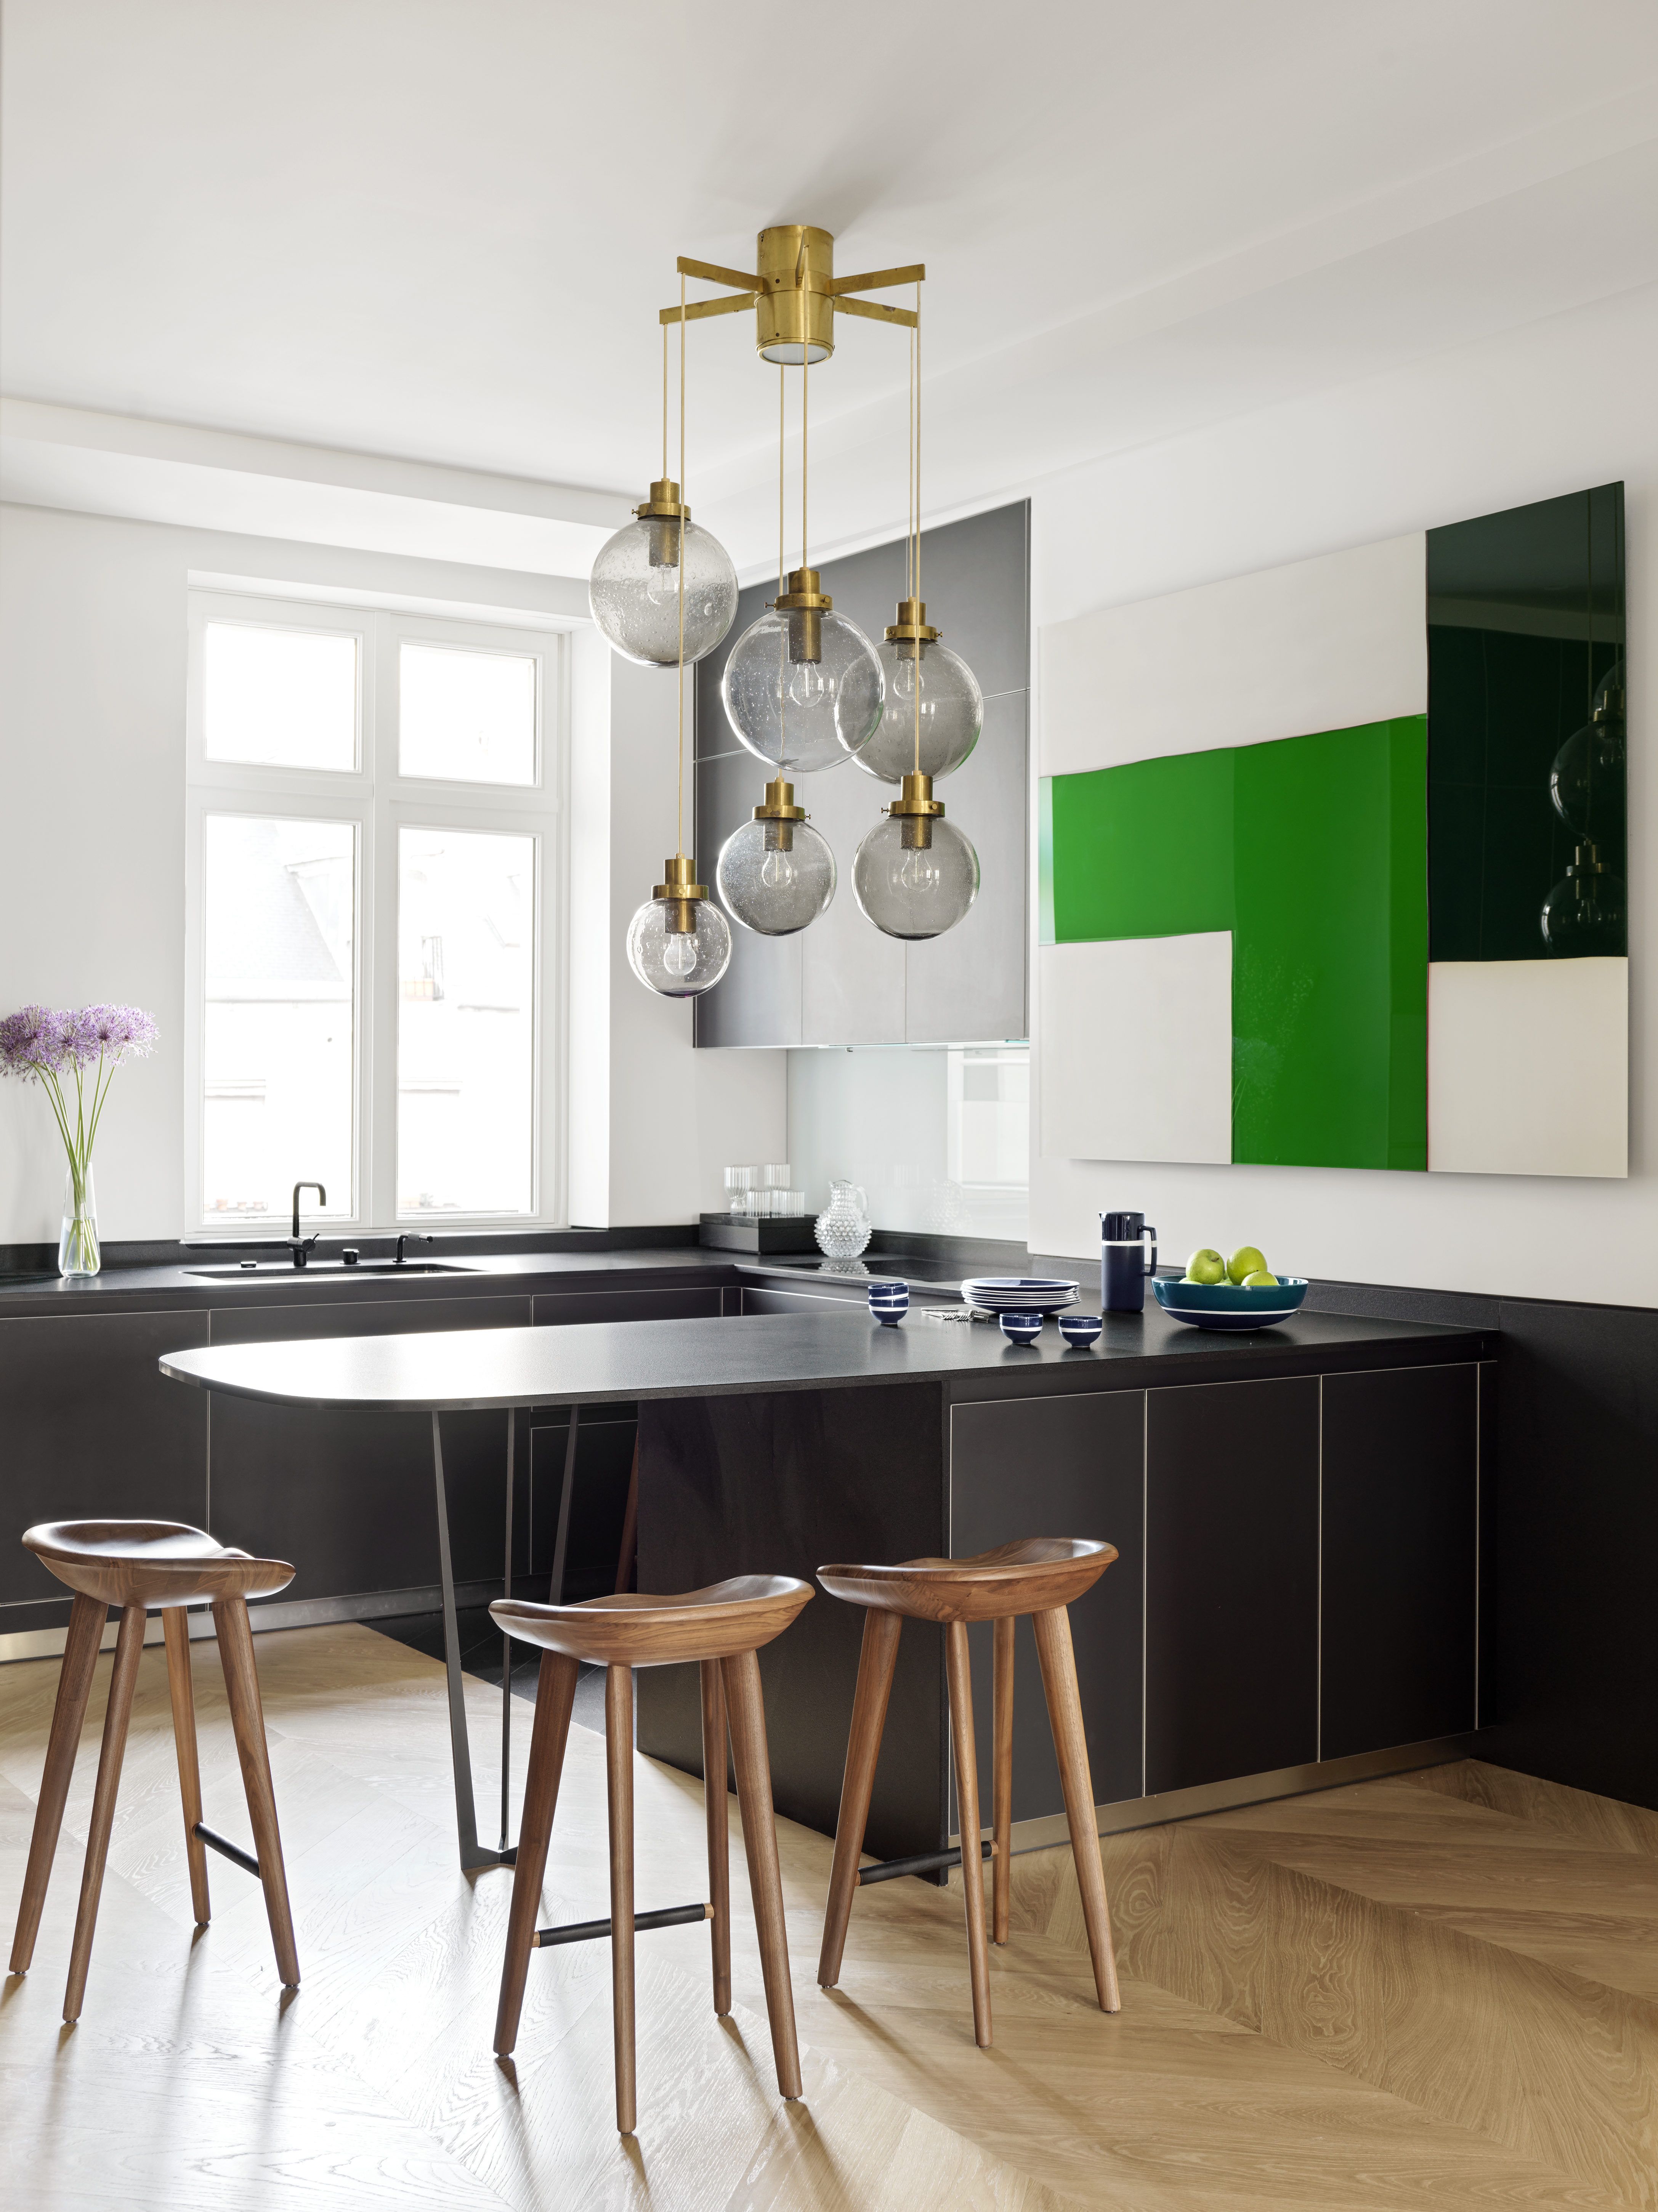 30 Best Kitchen Decor Ideas 2021 Decorating For The Kitchen